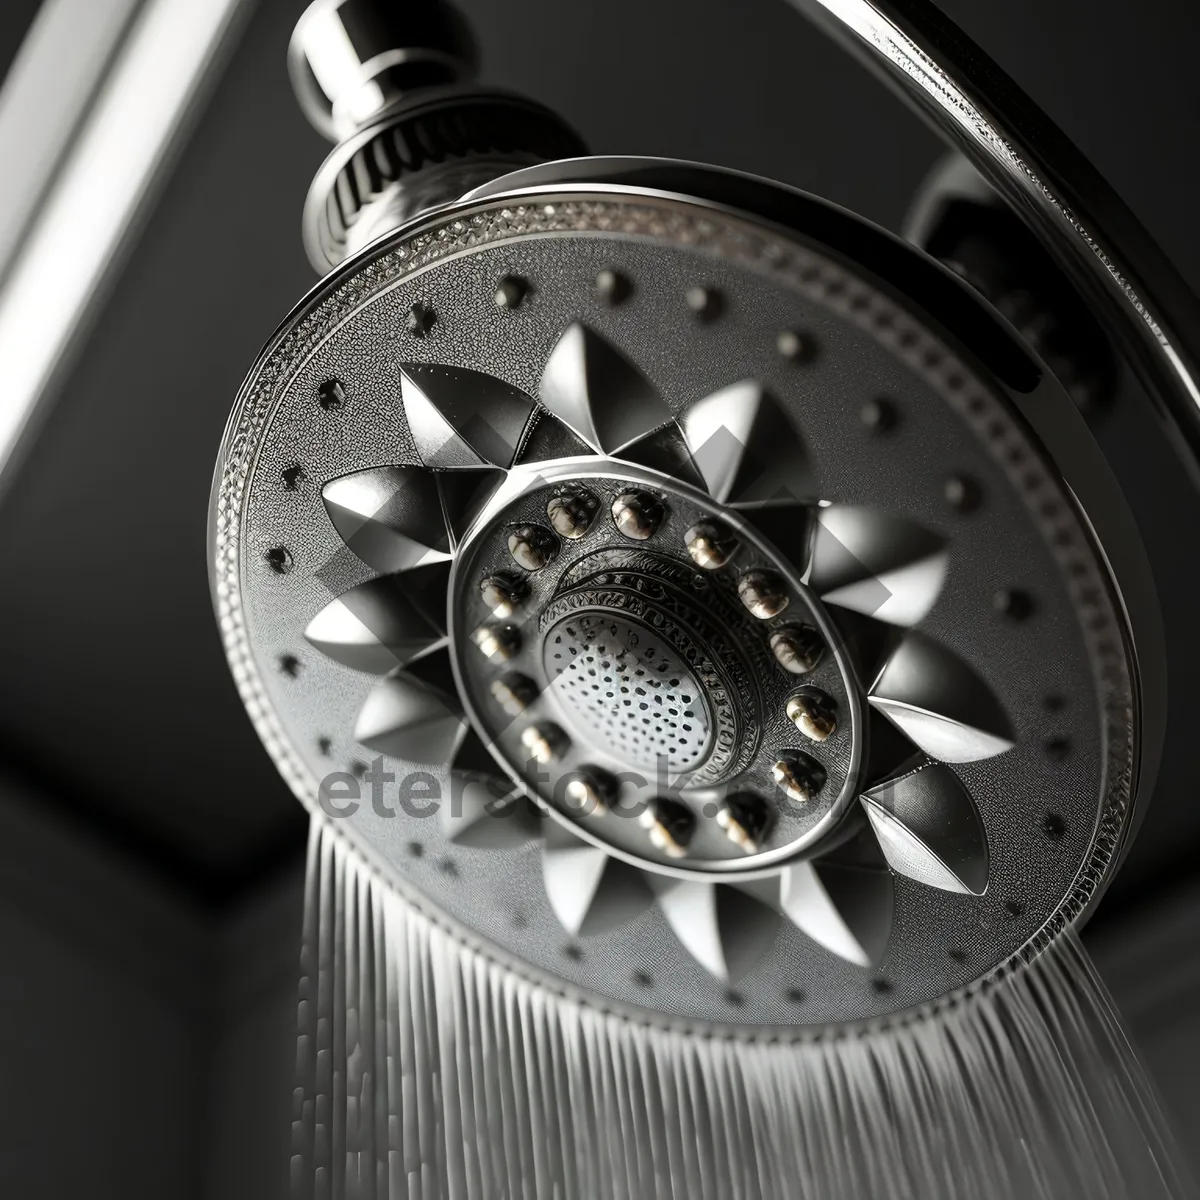 Picture of Metal Shower Strainer: Efficient Plumbing Fixture for Filtering Water